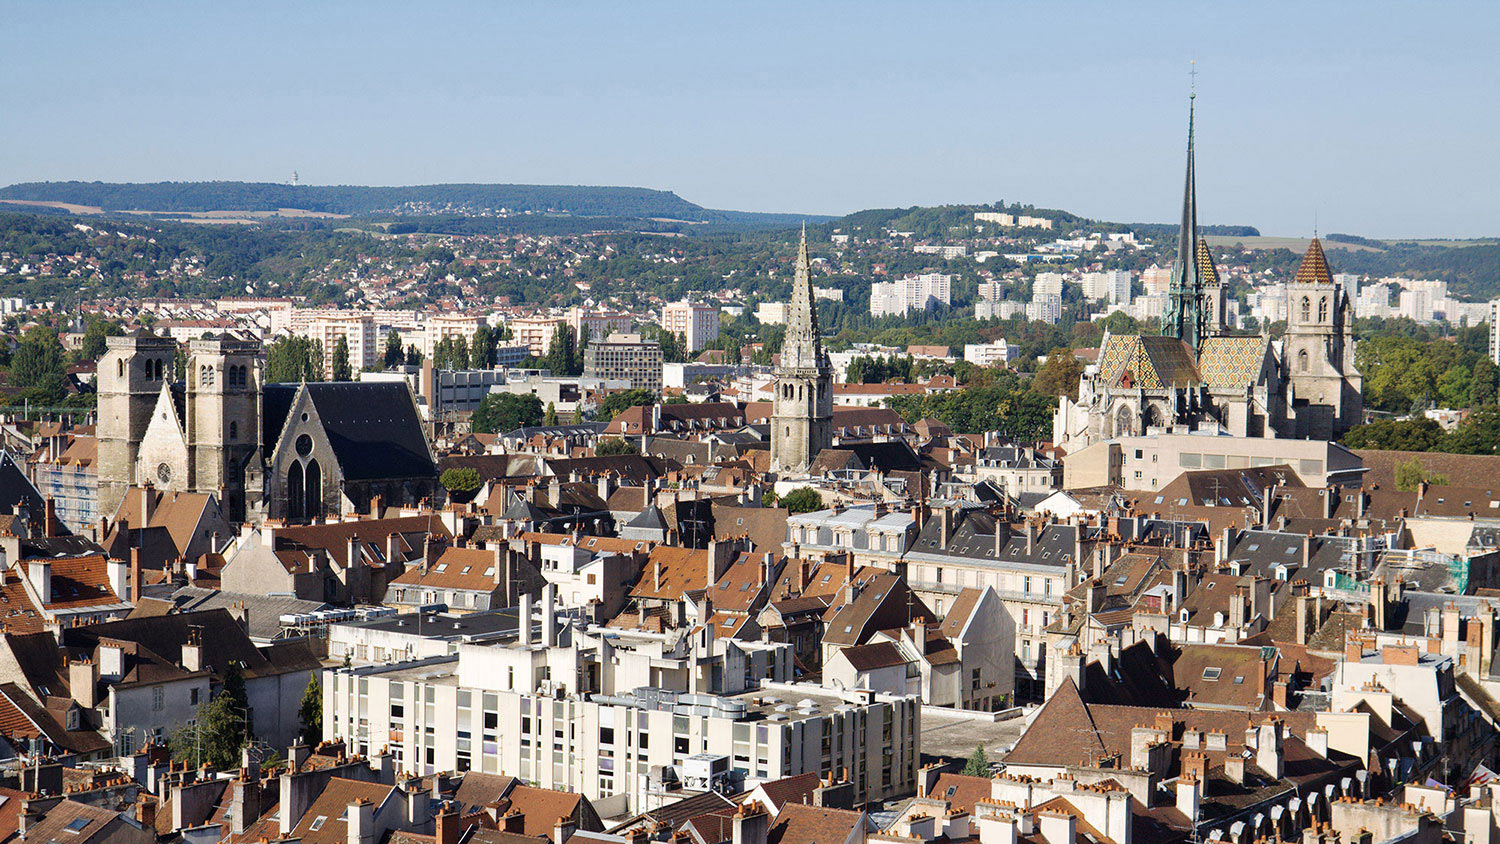 City of Dijon